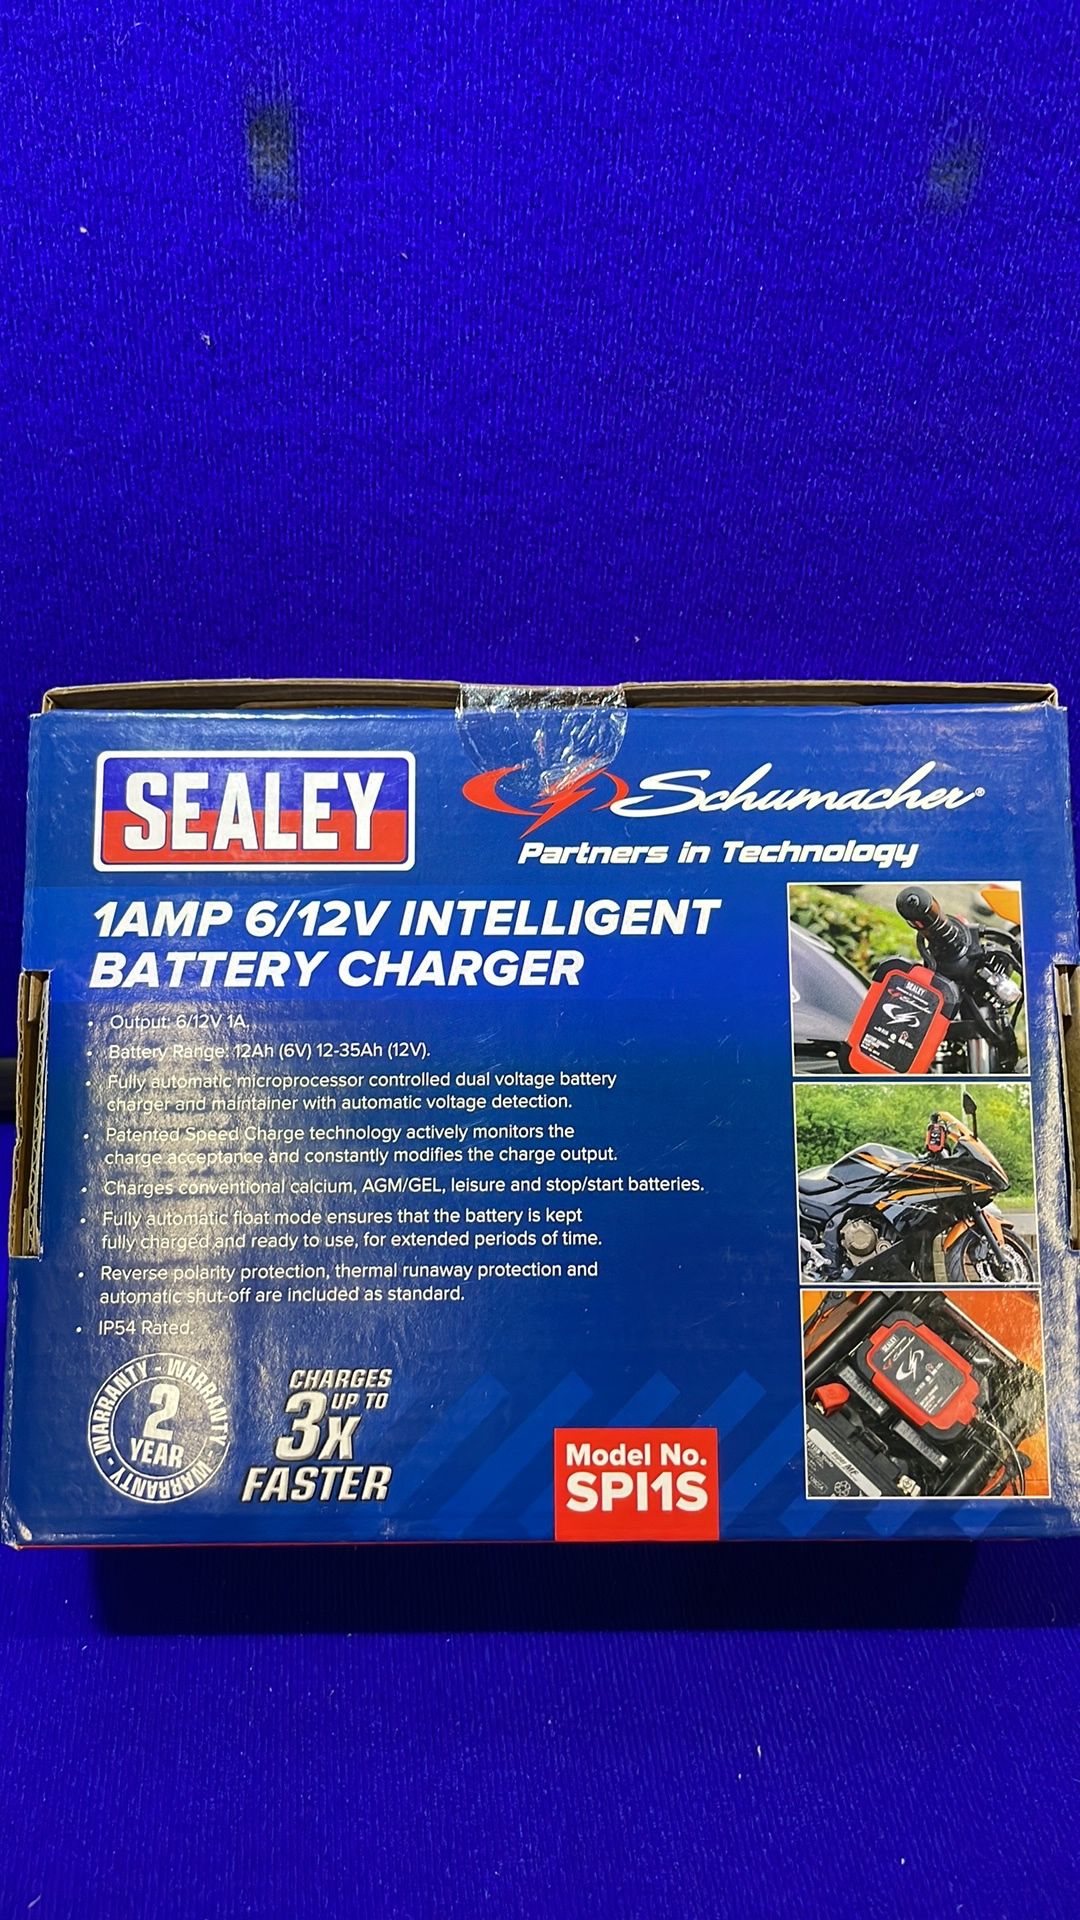 3 x Sealey Schumacher Intelligent Battery Charger 1A 6/2V SPi1S - Image 4 of 4